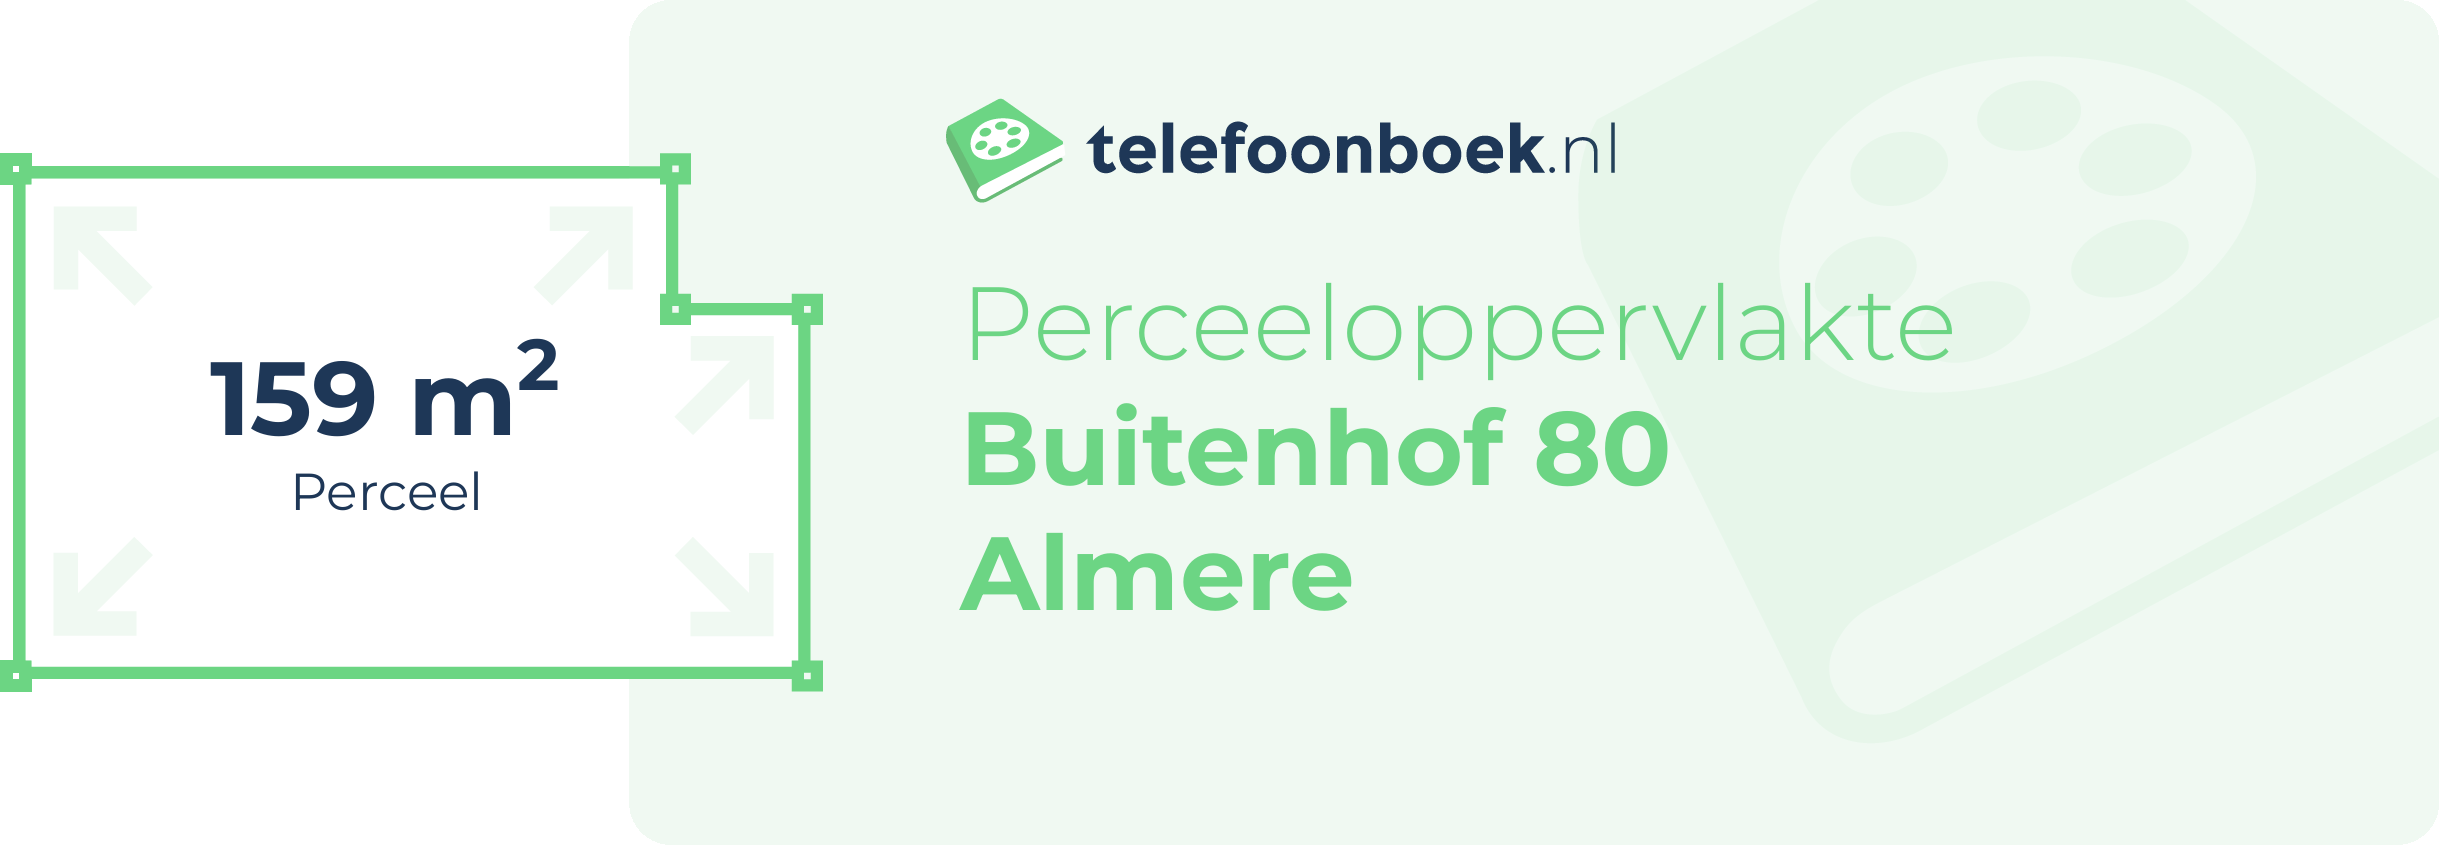 Perceeloppervlakte Buitenhof 80 Almere